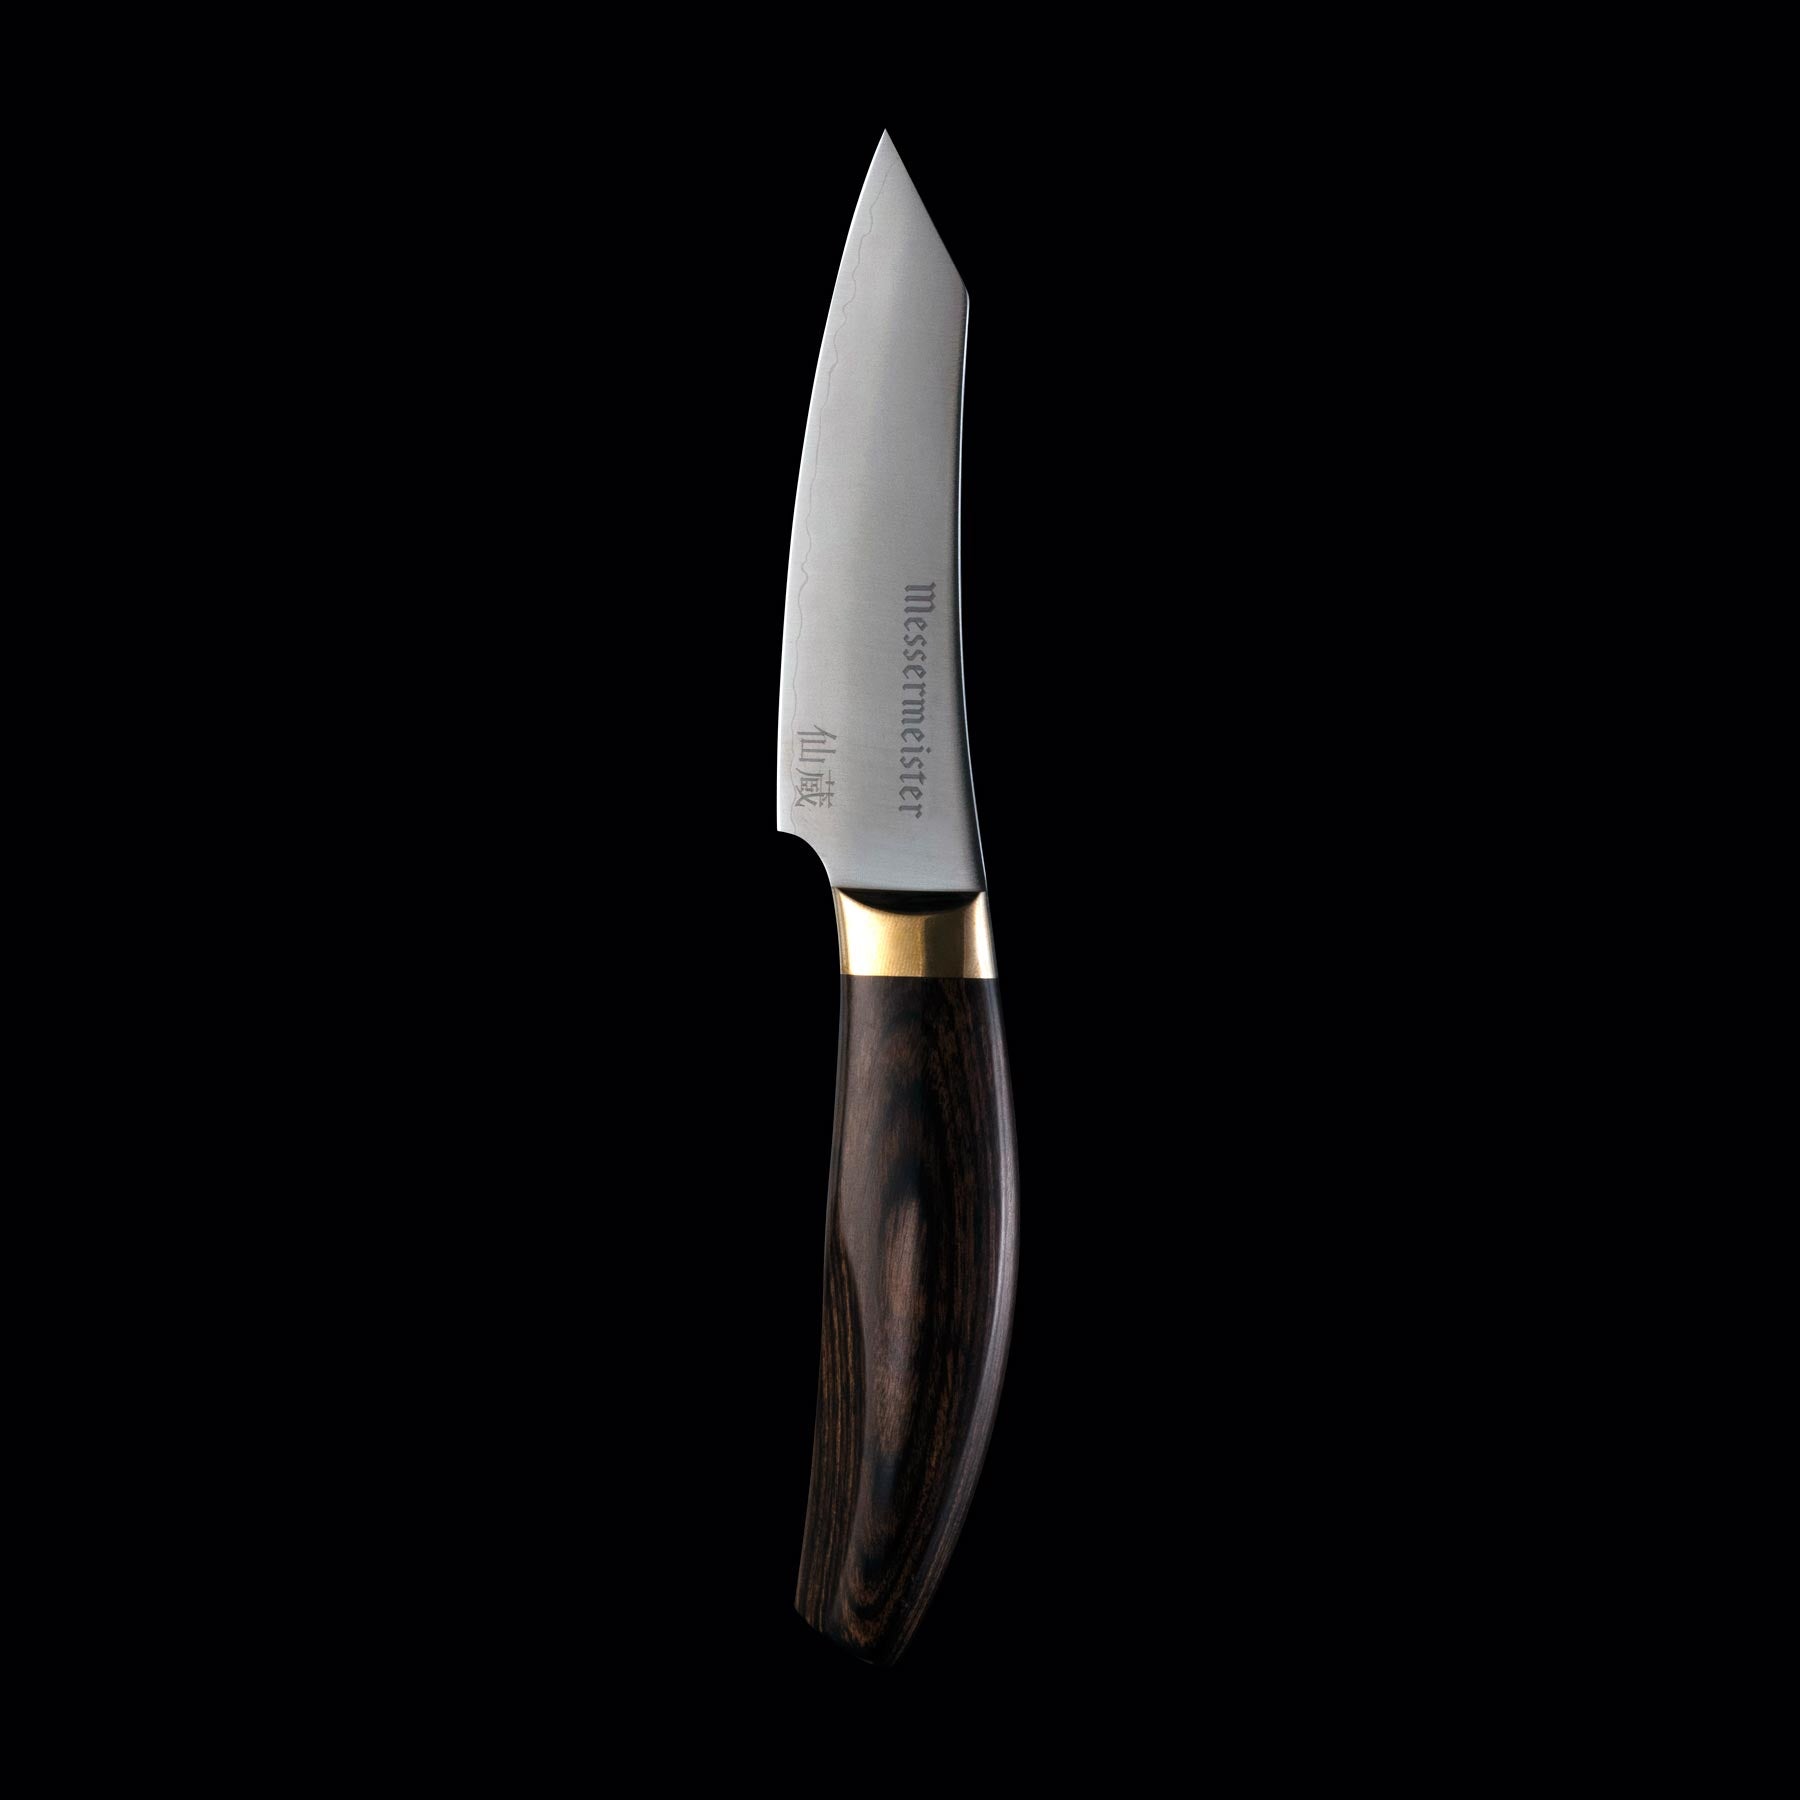 Messermeister Kawashima Chef's Knife